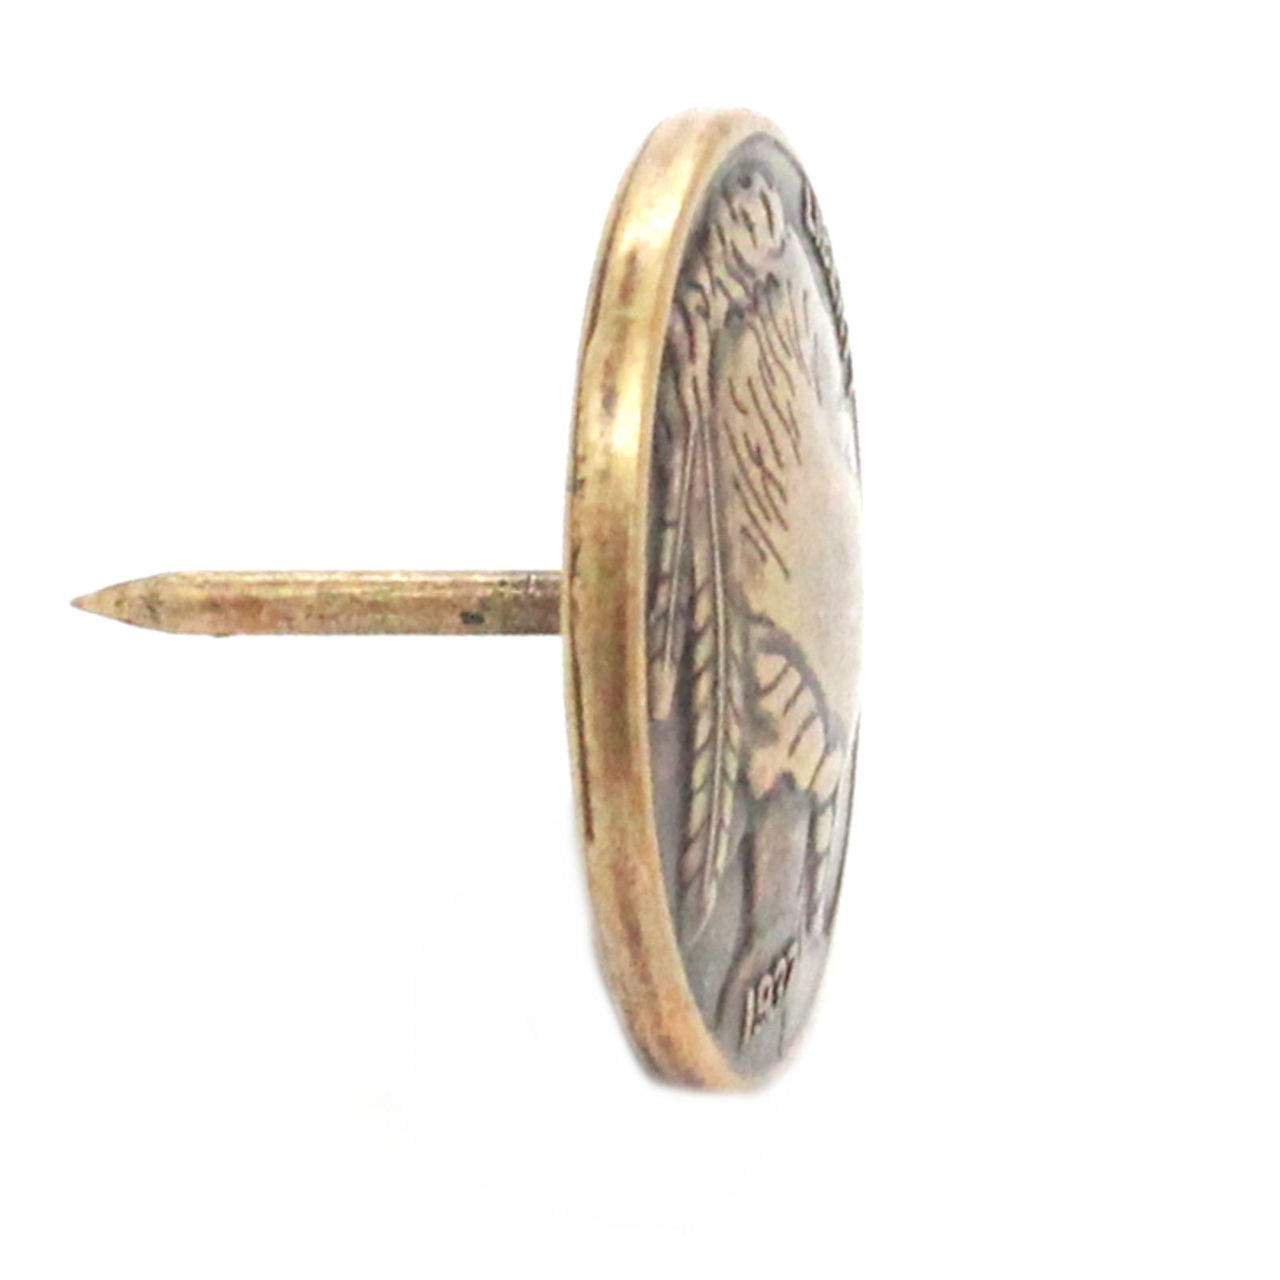 Indian nickel antique brass side